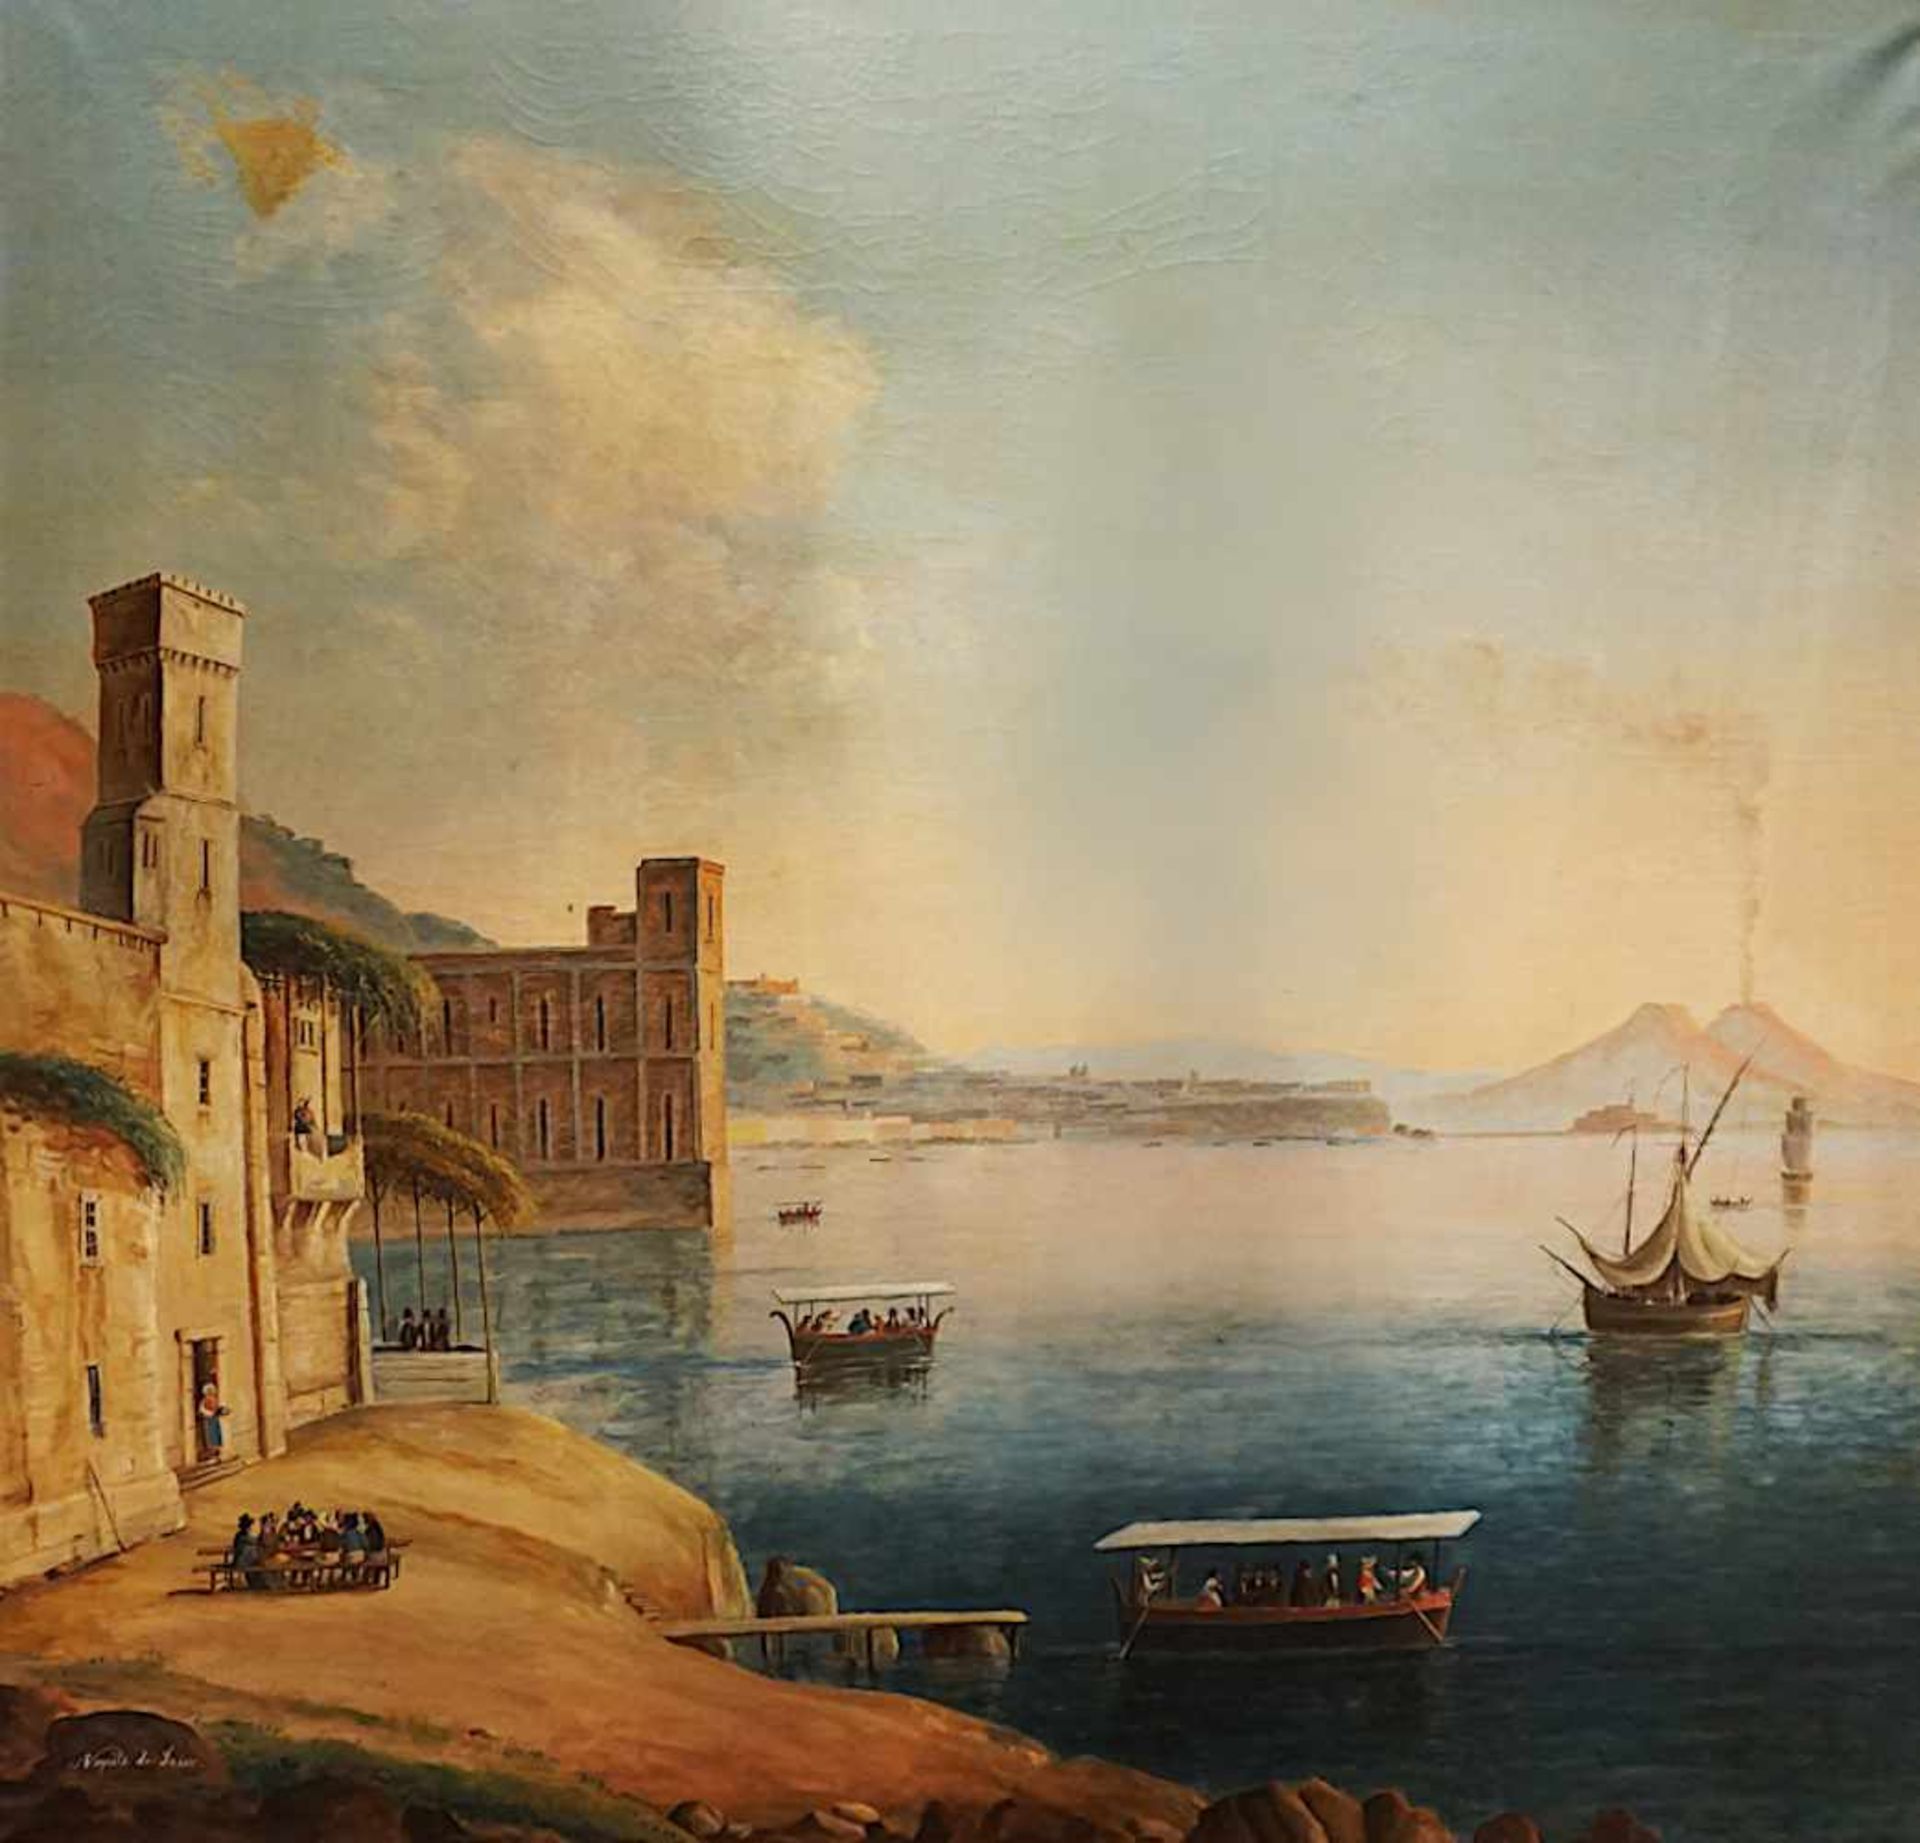 1 Ölgemälde "Golf von Neapel" 19.Jh. wohl um 1820, L.u. bez. "Napoli da Iriso",